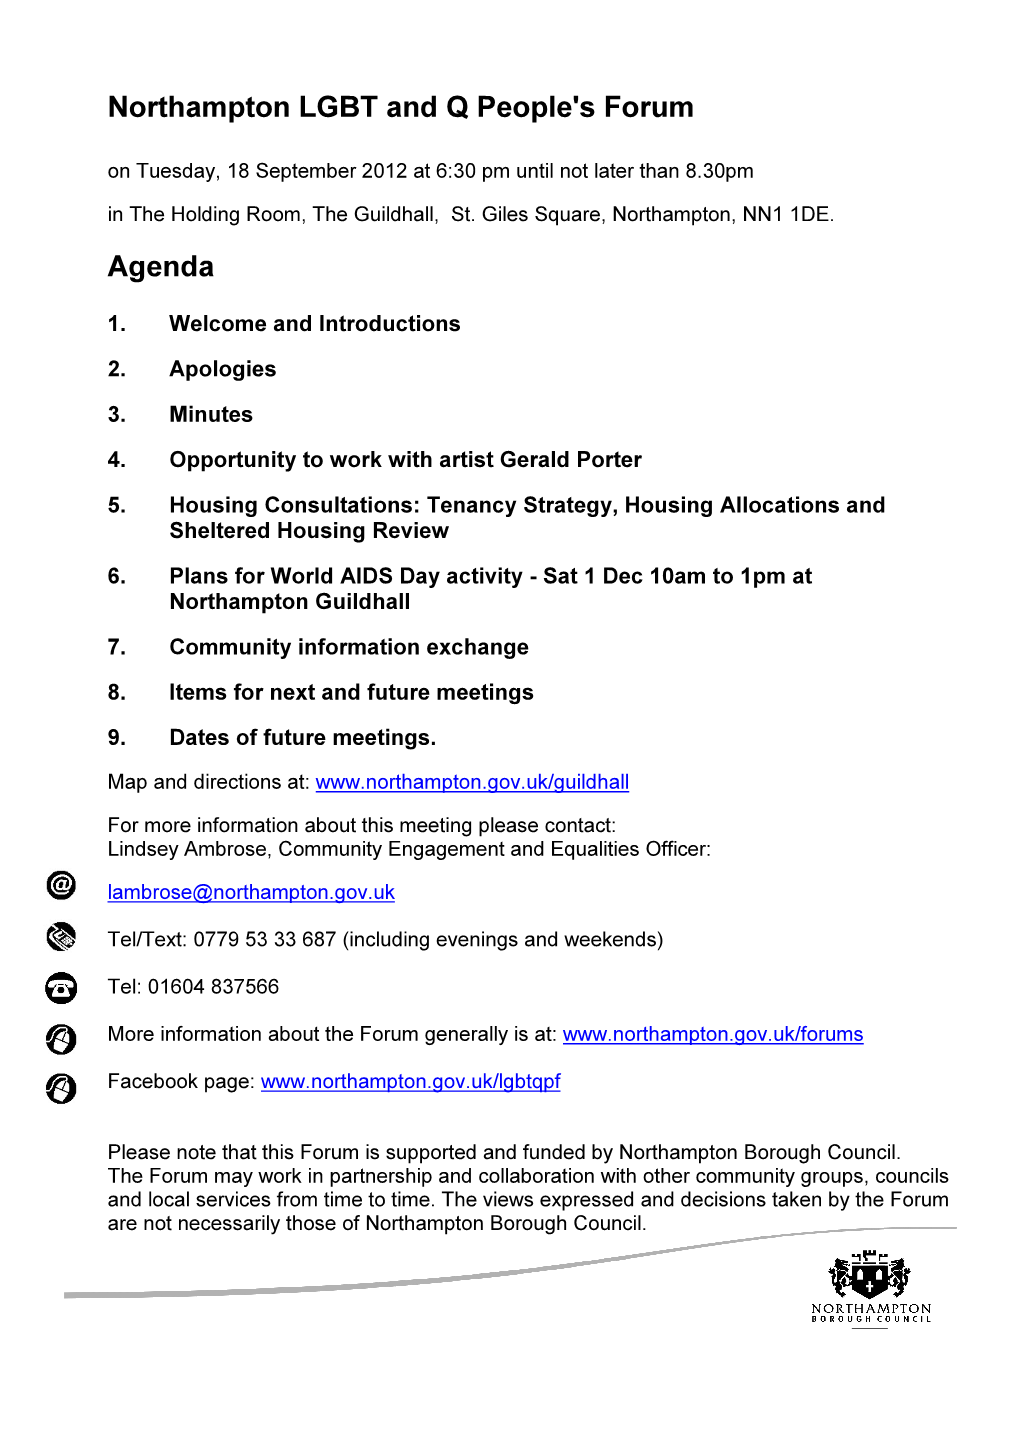 Northampton LGBT and Q People's Forum Agenda